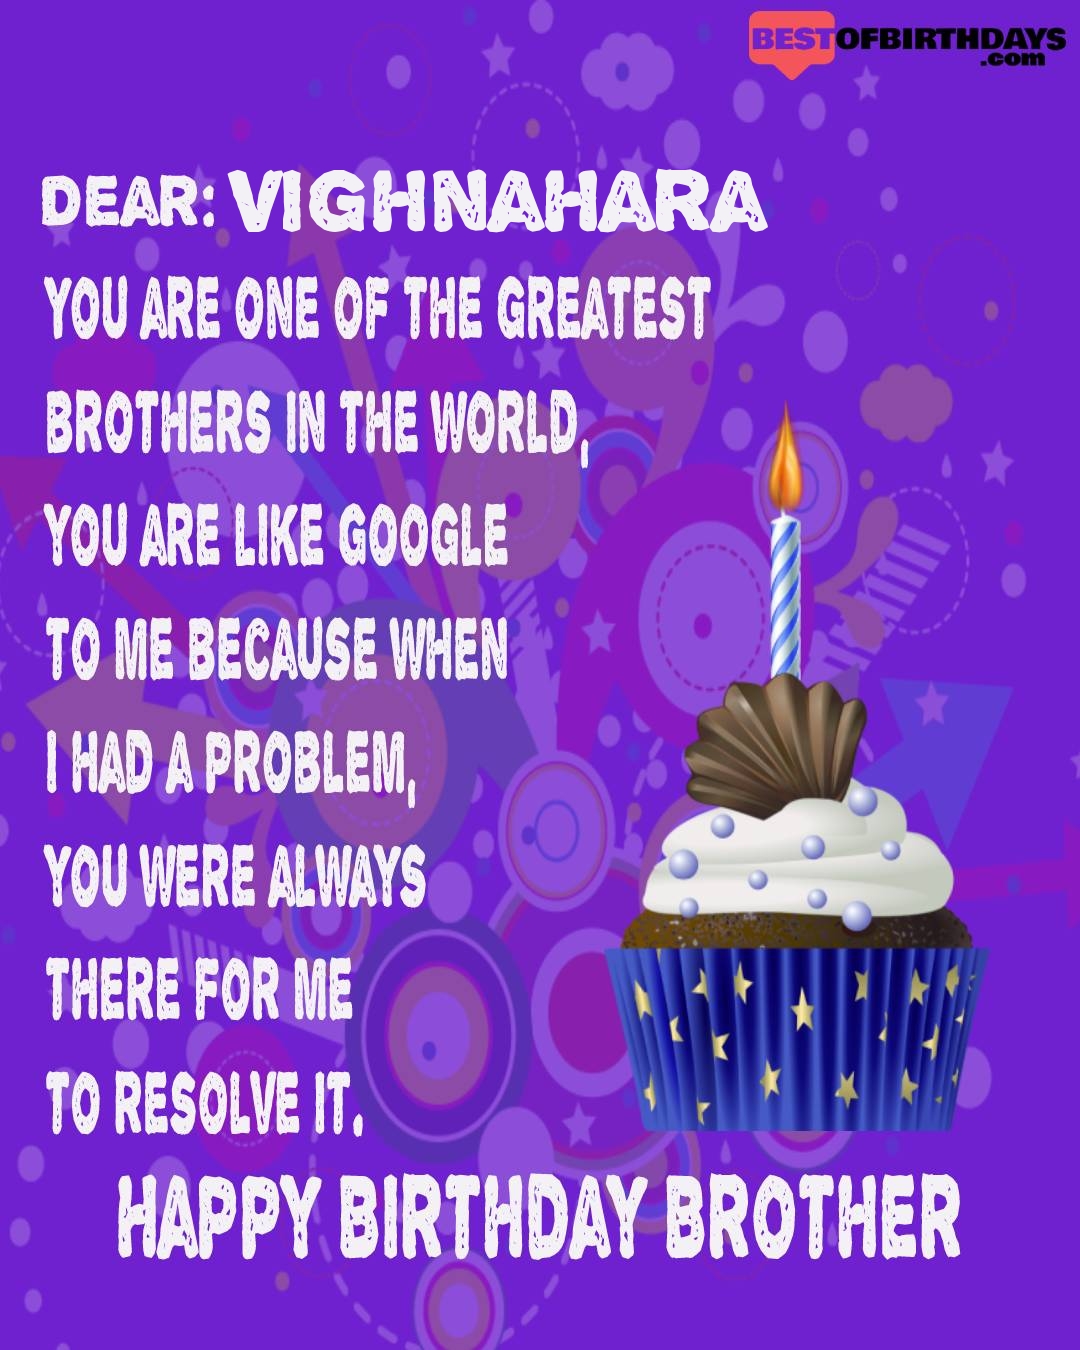 Happy birthday vighnahara bhai brother bro